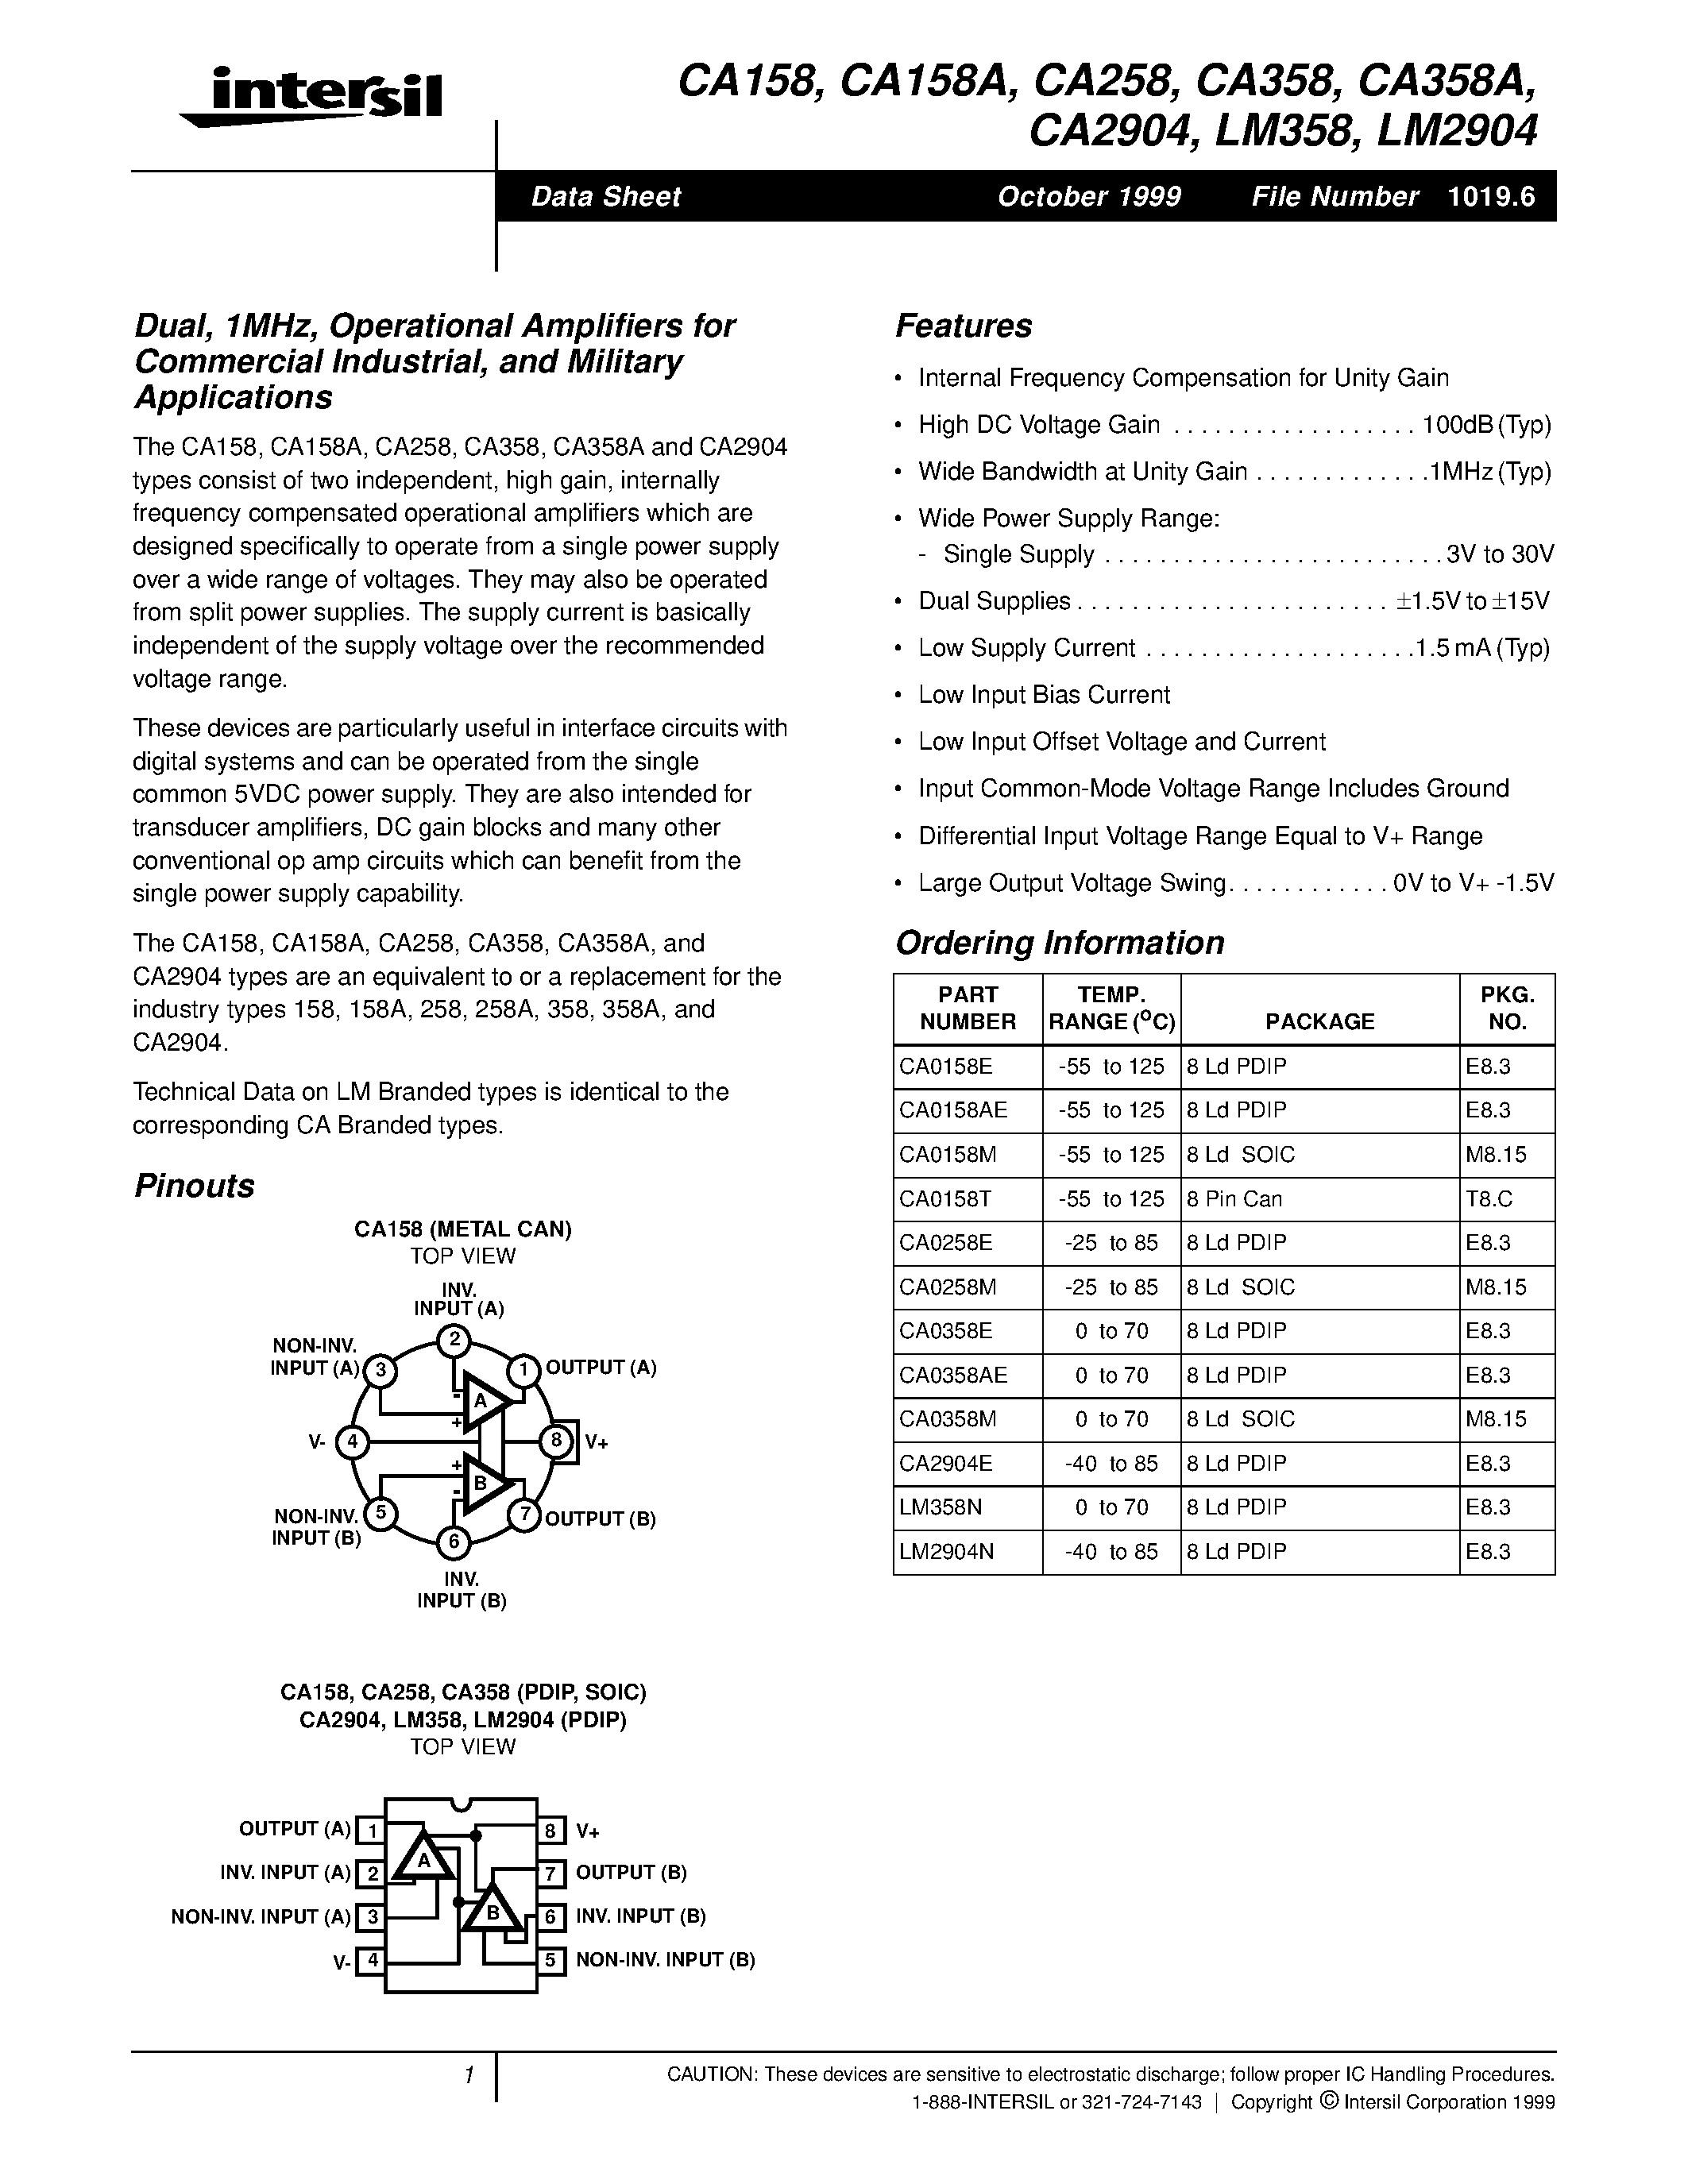 Даташит CA2904 - Operational Amplifiers страница 1